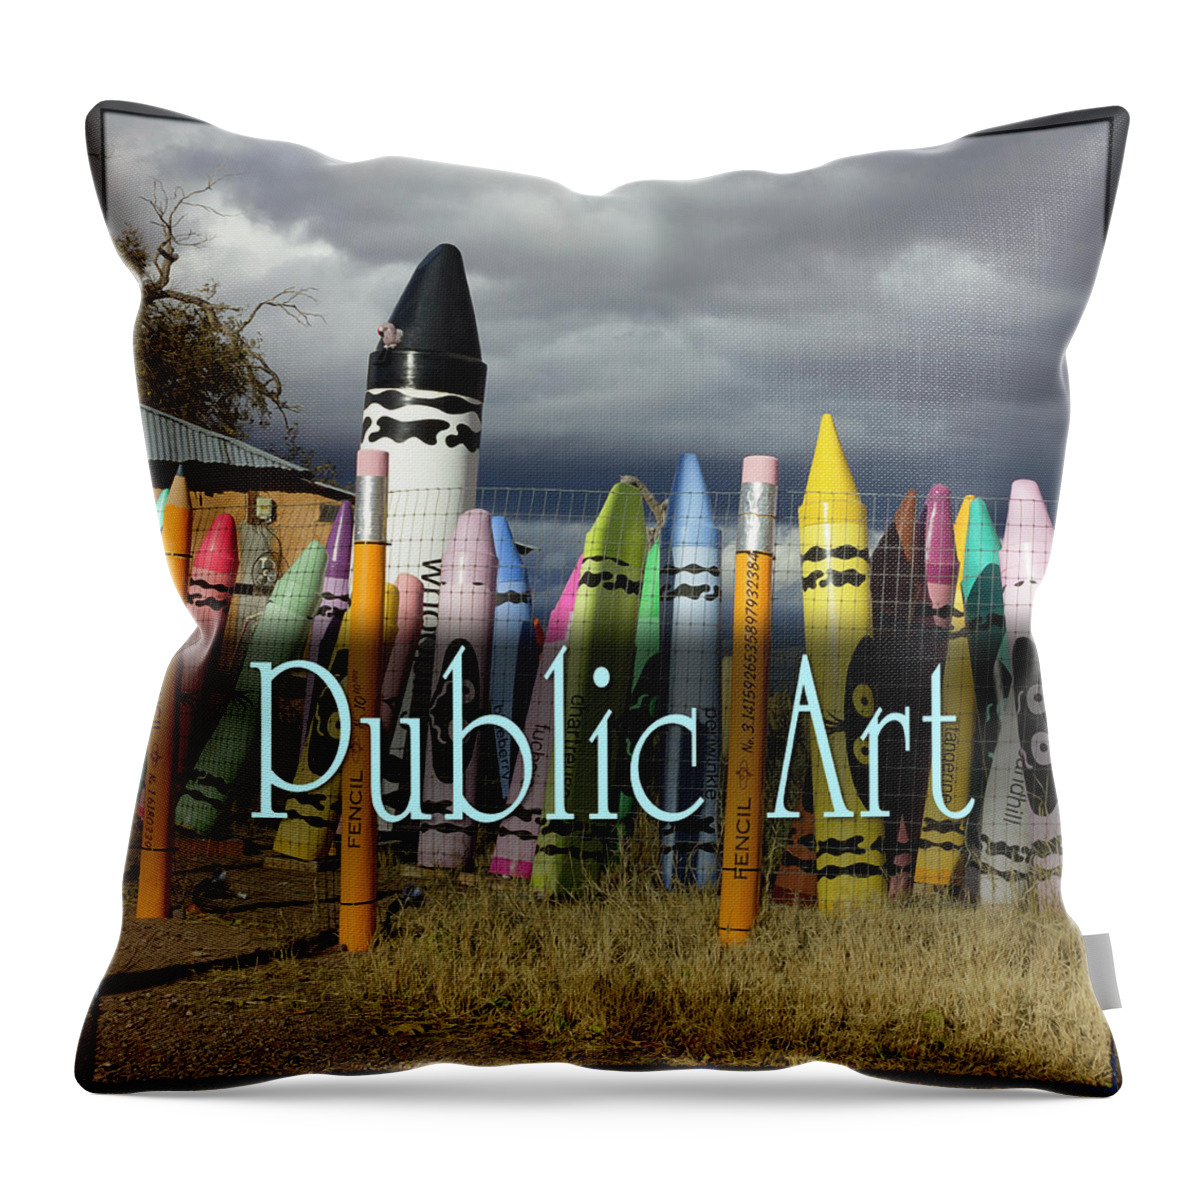 Sign Throw Pillow featuring the digital art Public Art by Becky Titus